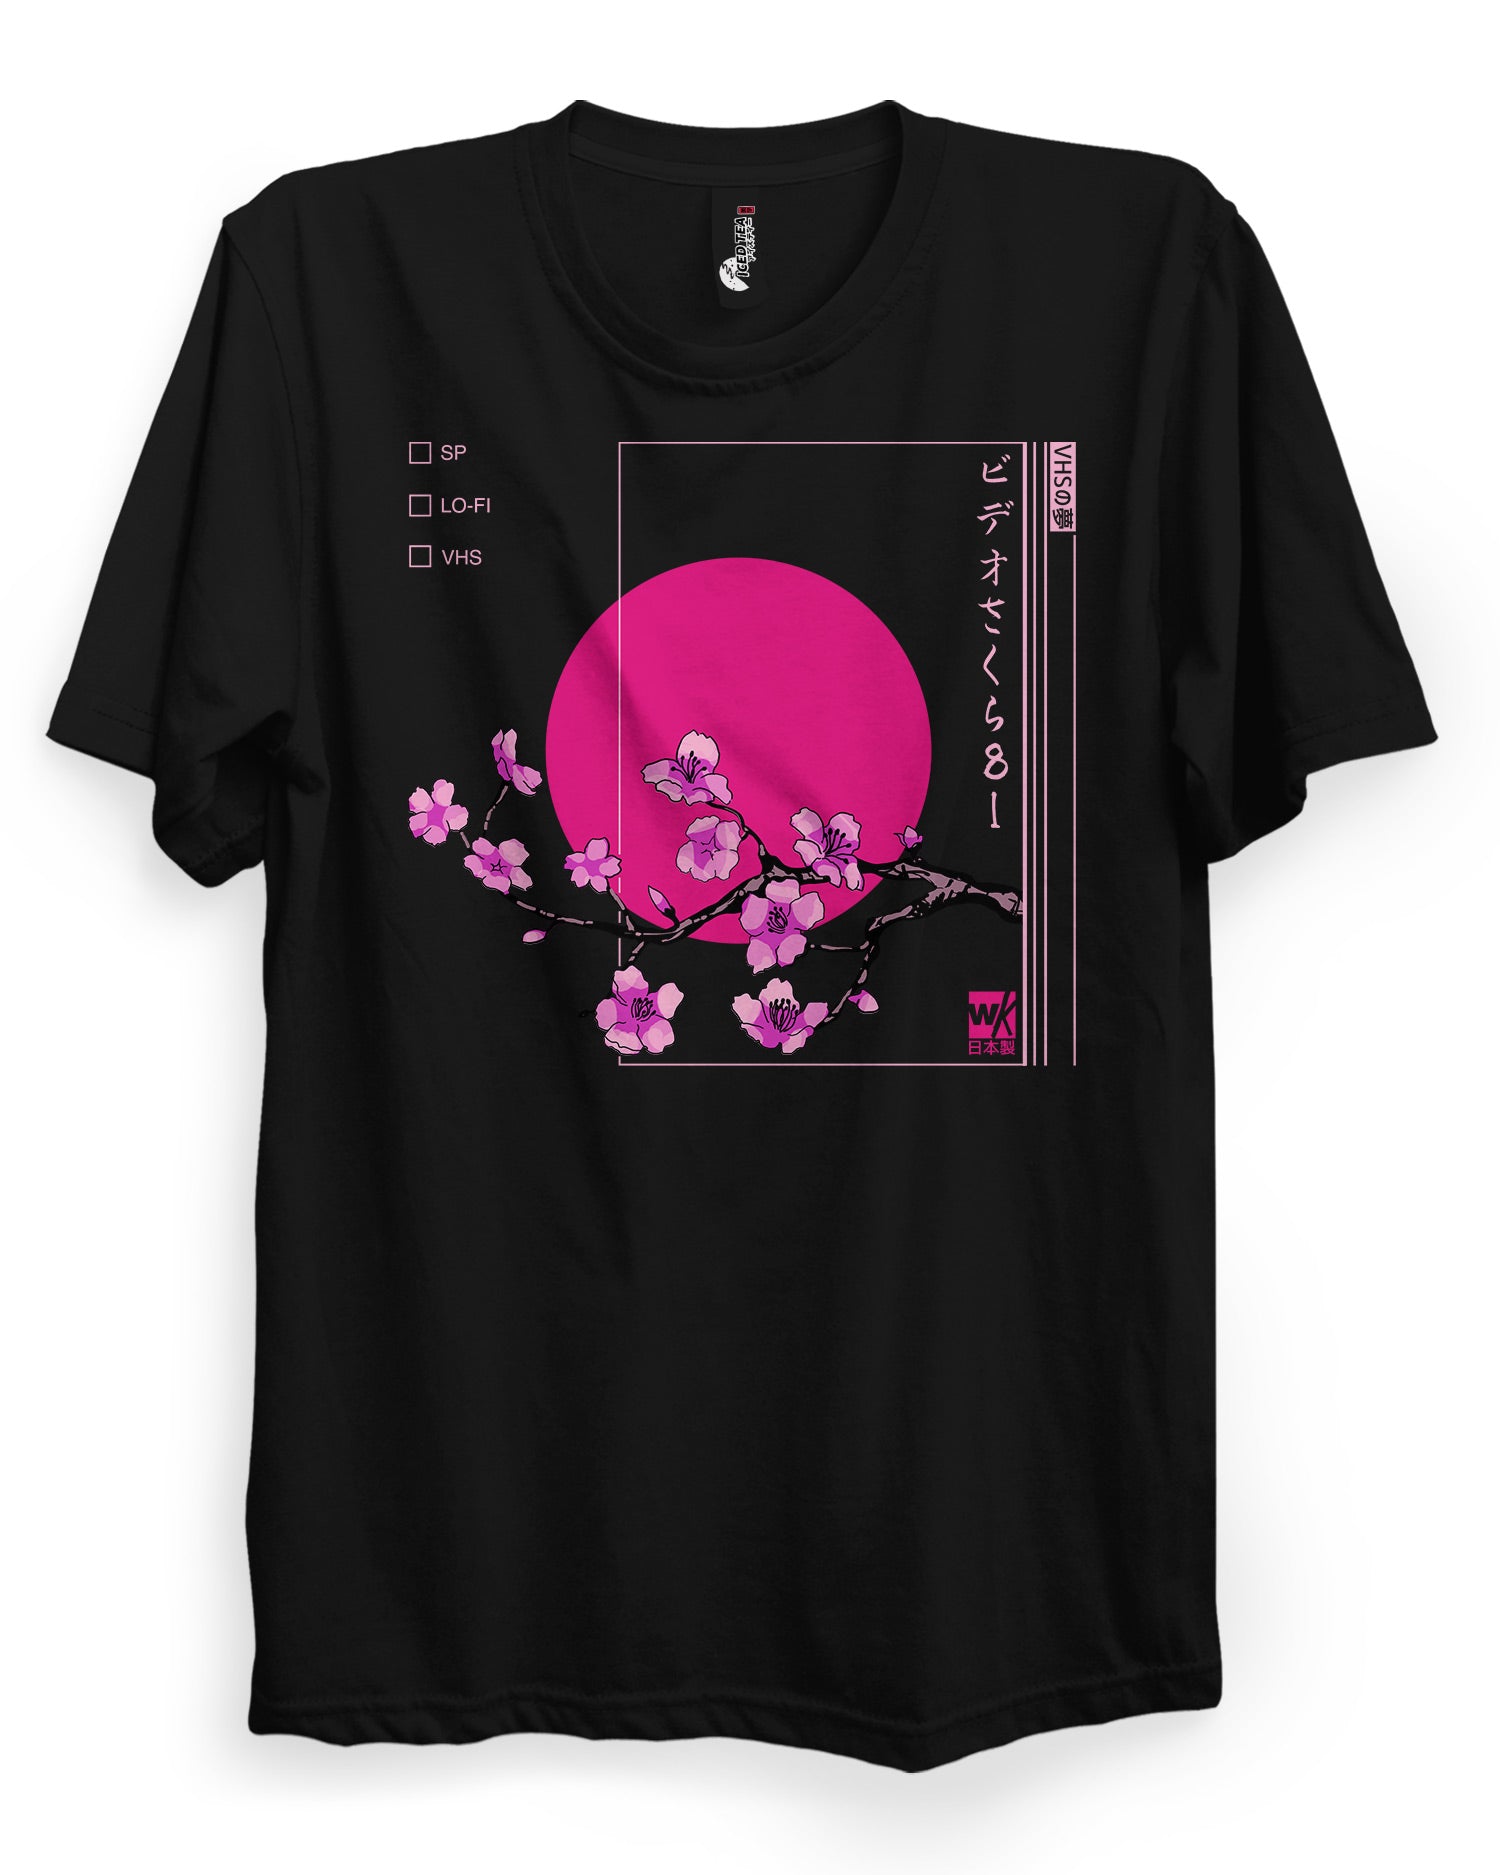 Sunset LOFI Sakura - Vaporwave T-Shirt - Dark Aesthetics and Anime Clothing Streetwear